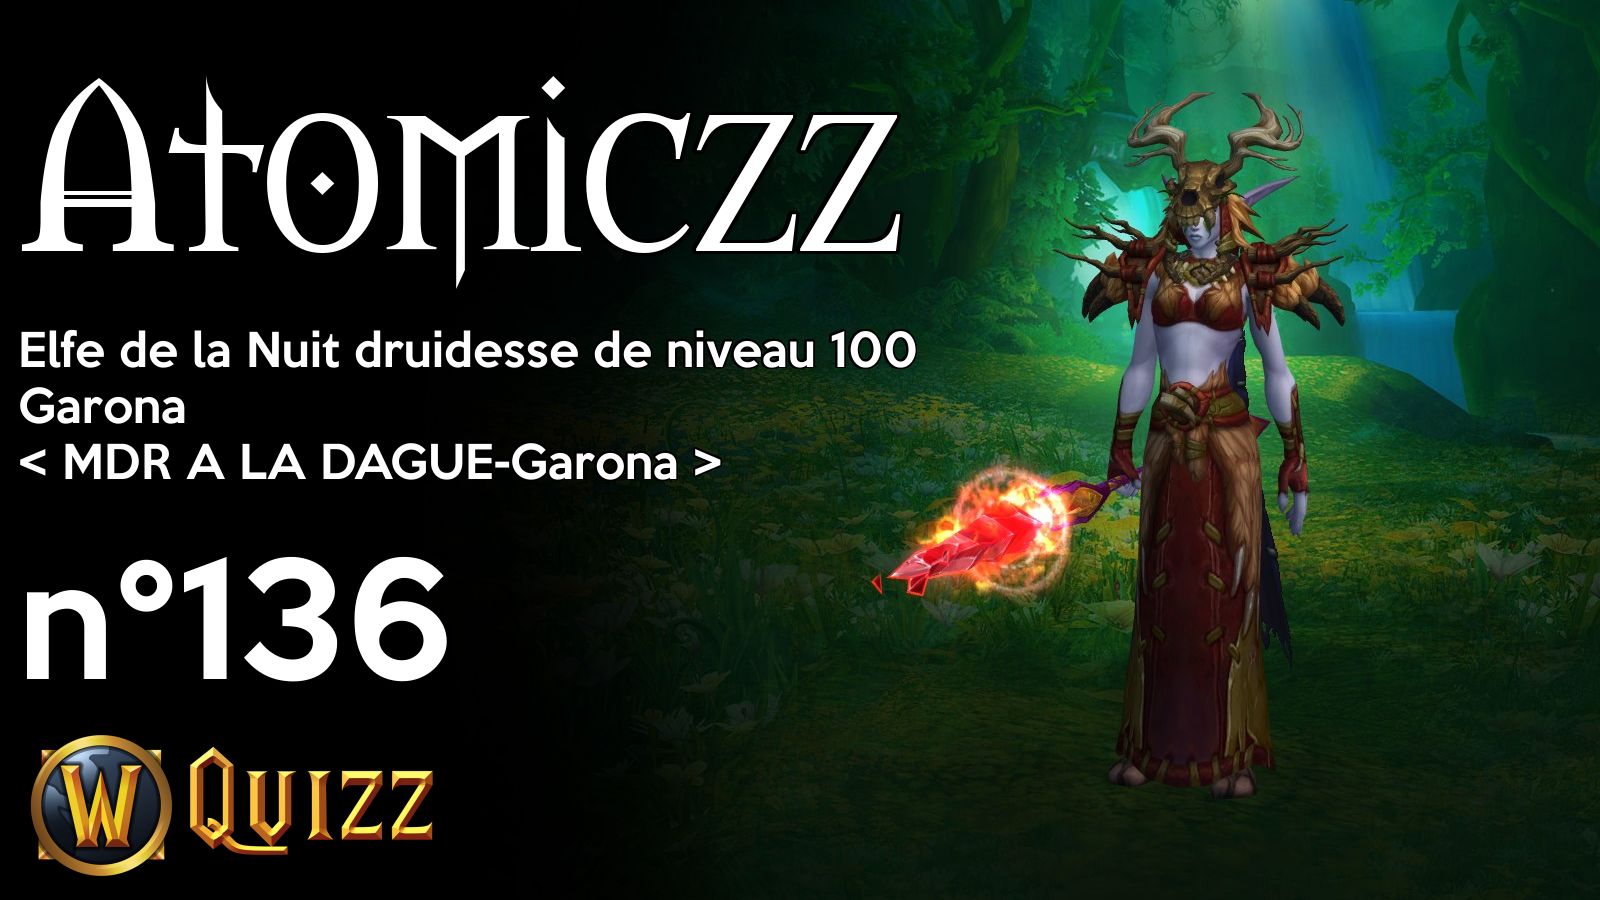 Atomiczz, Elfe de la Nuit druidesse de niveau 100, Garona